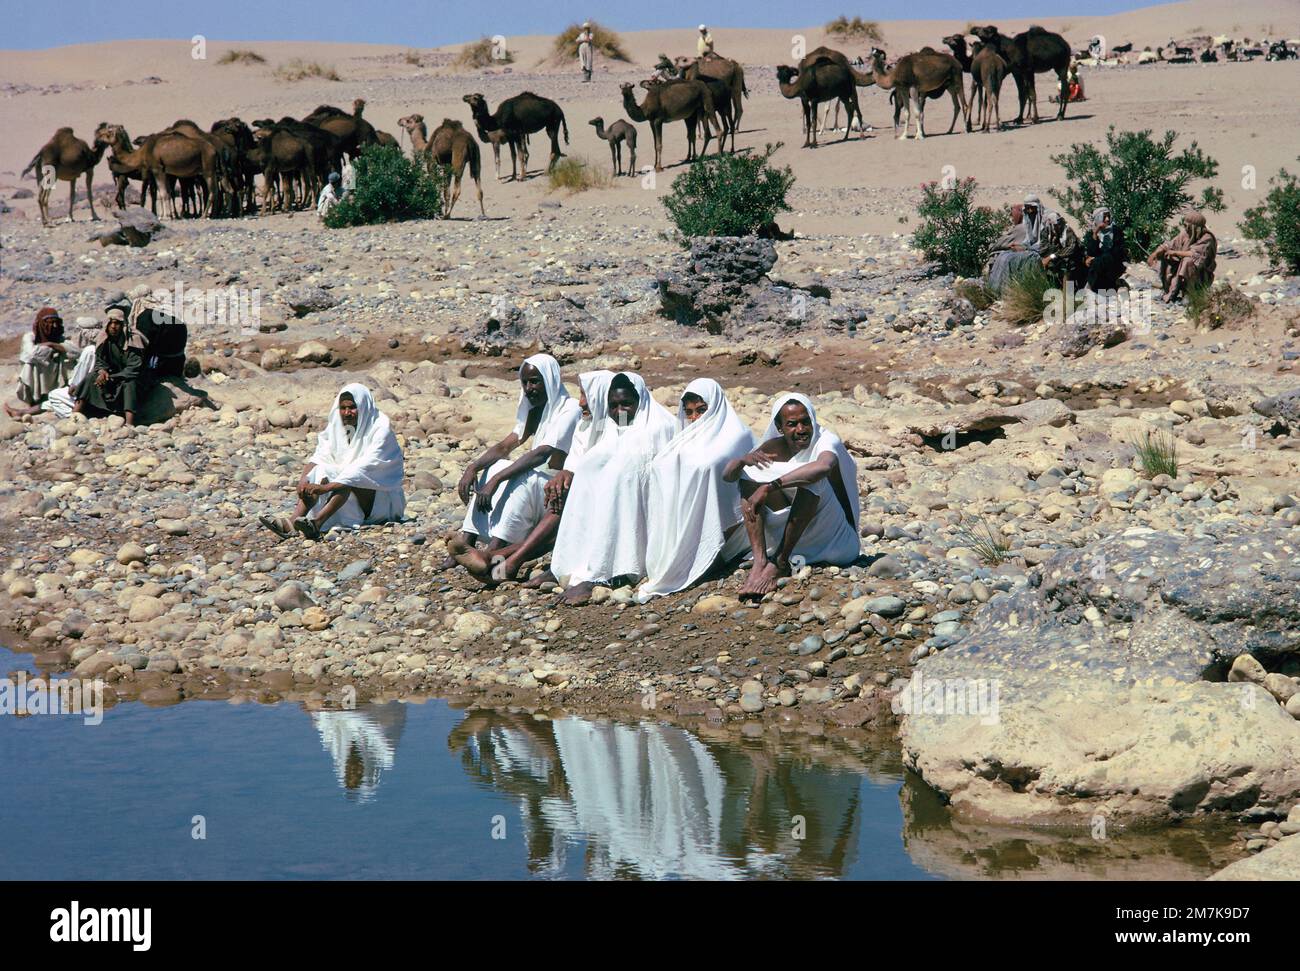 Africa. Morocco. Sahara region. Bedouin camel traders sitting by waterhole. Stock Photo